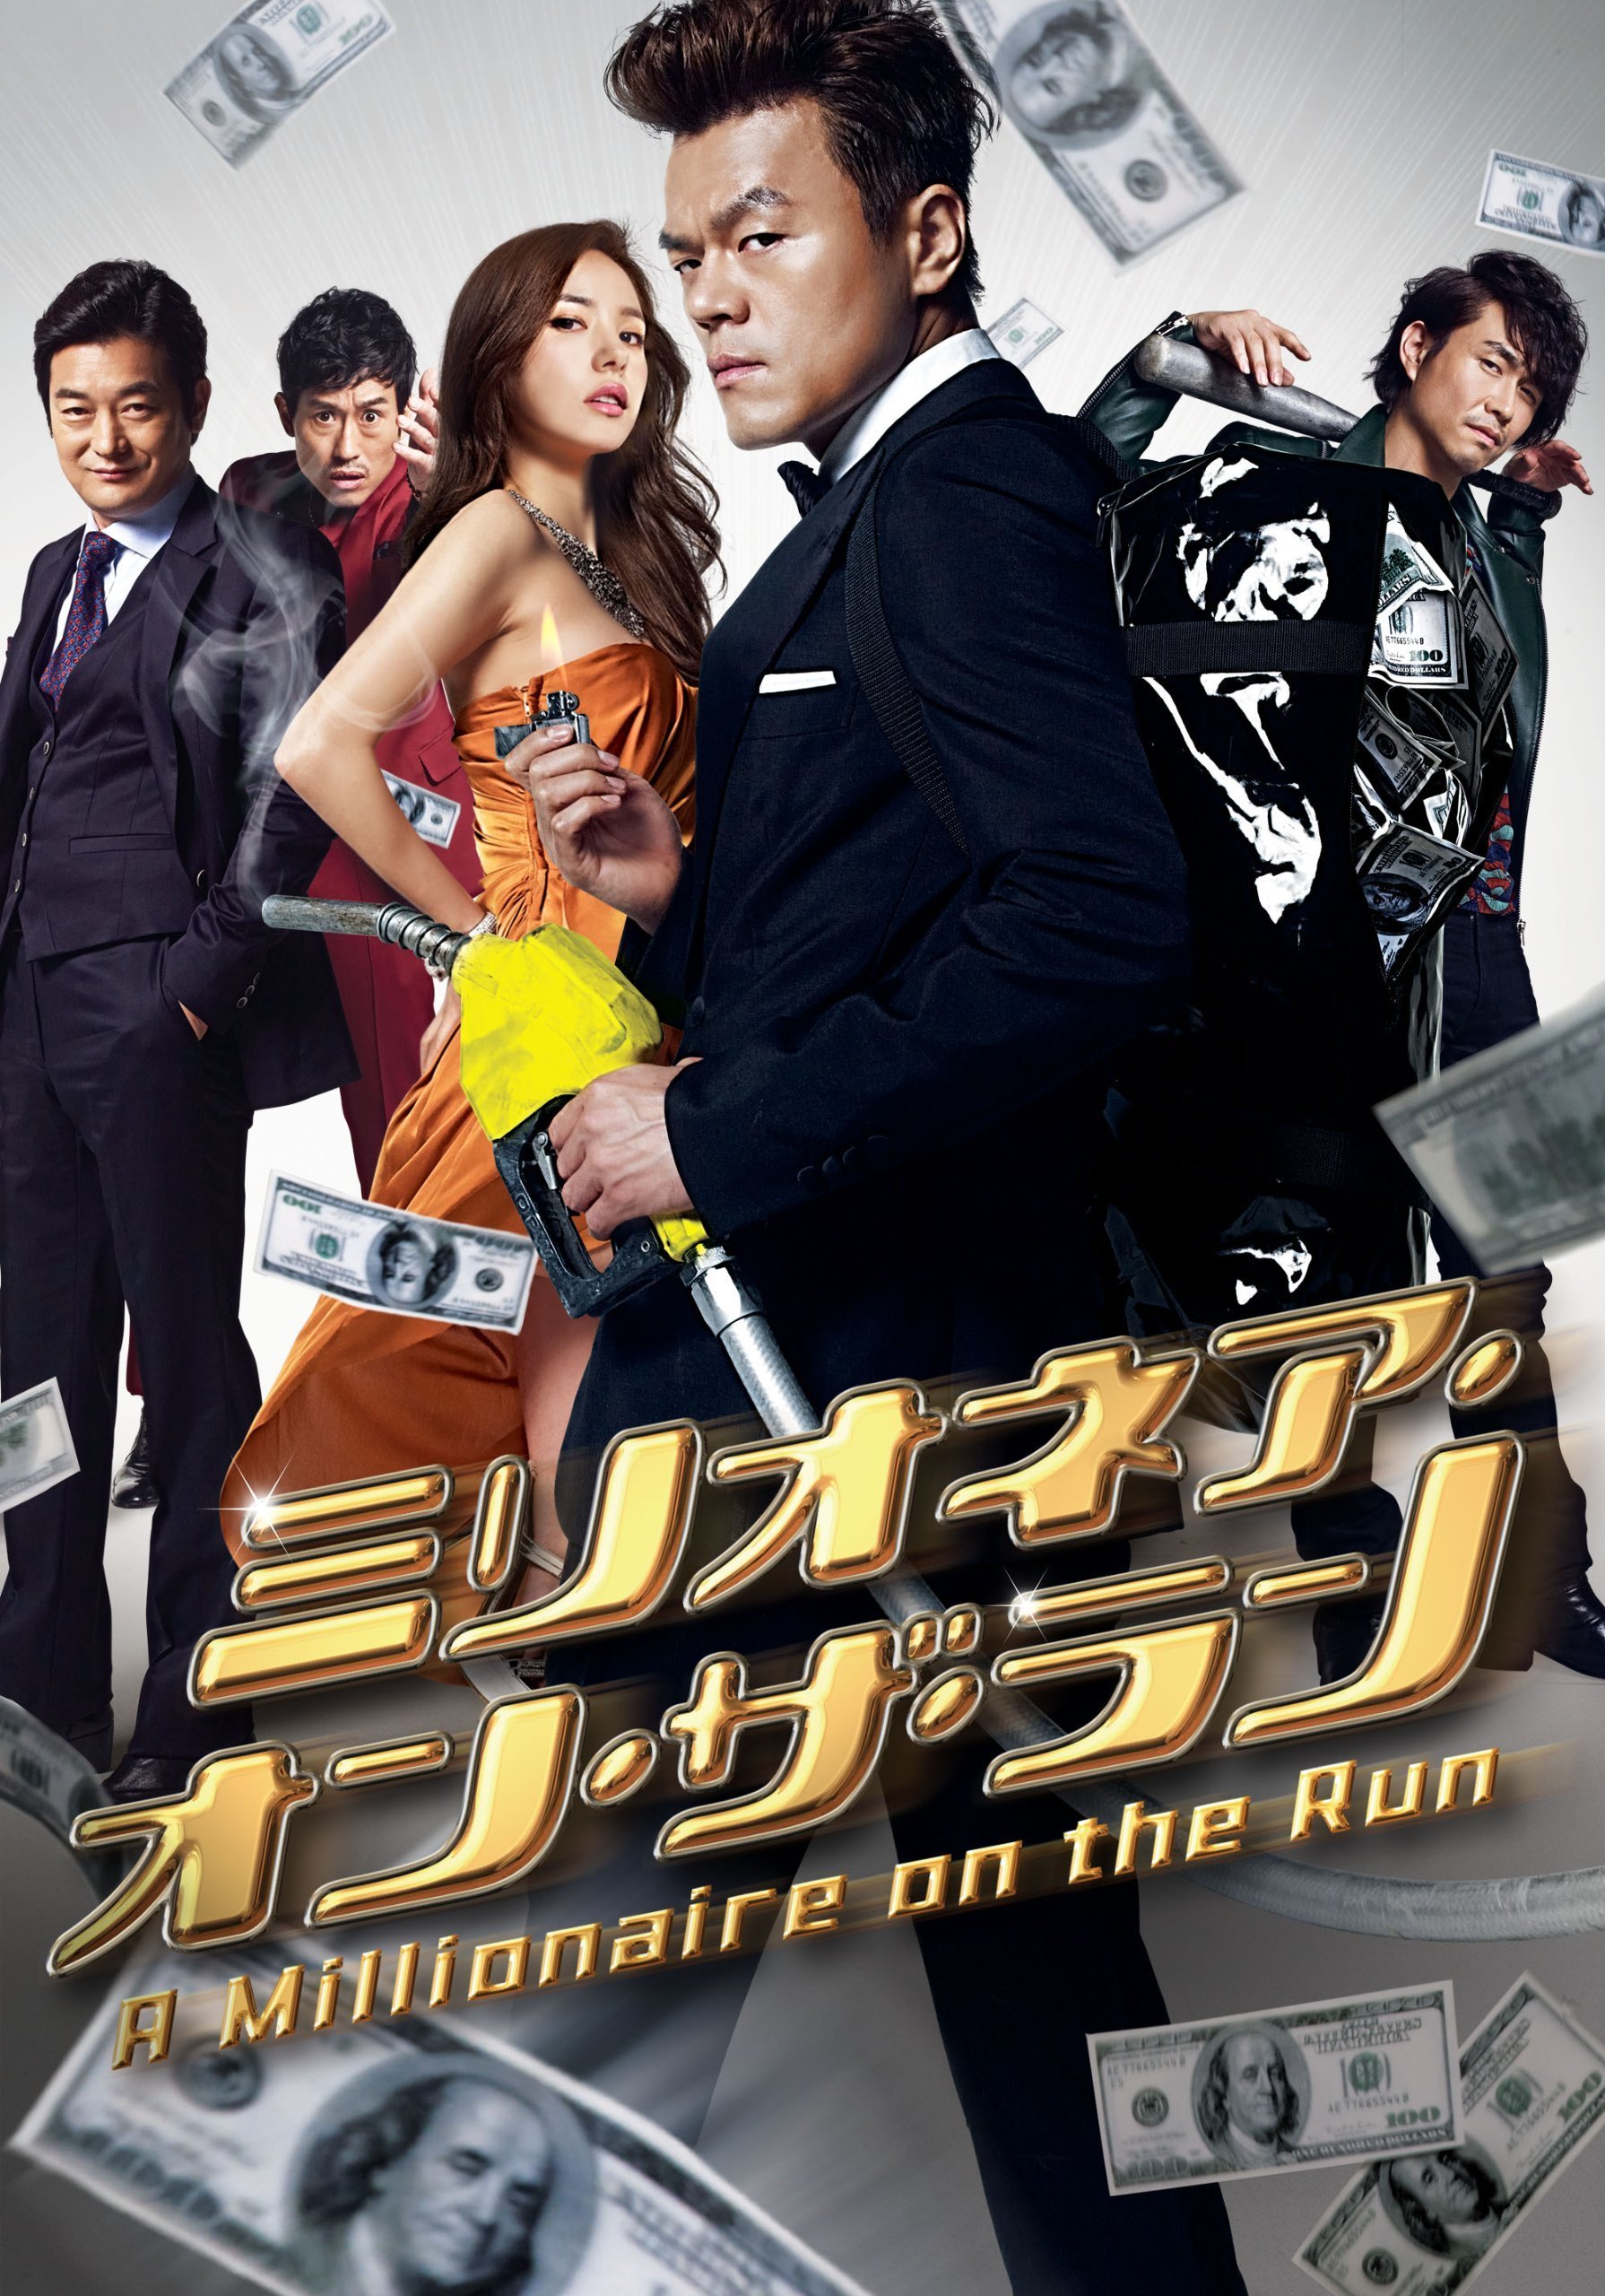 A Millionaire on the Run Blu-ray (ミリオネア・オン・ザ・ラン) (Japan)